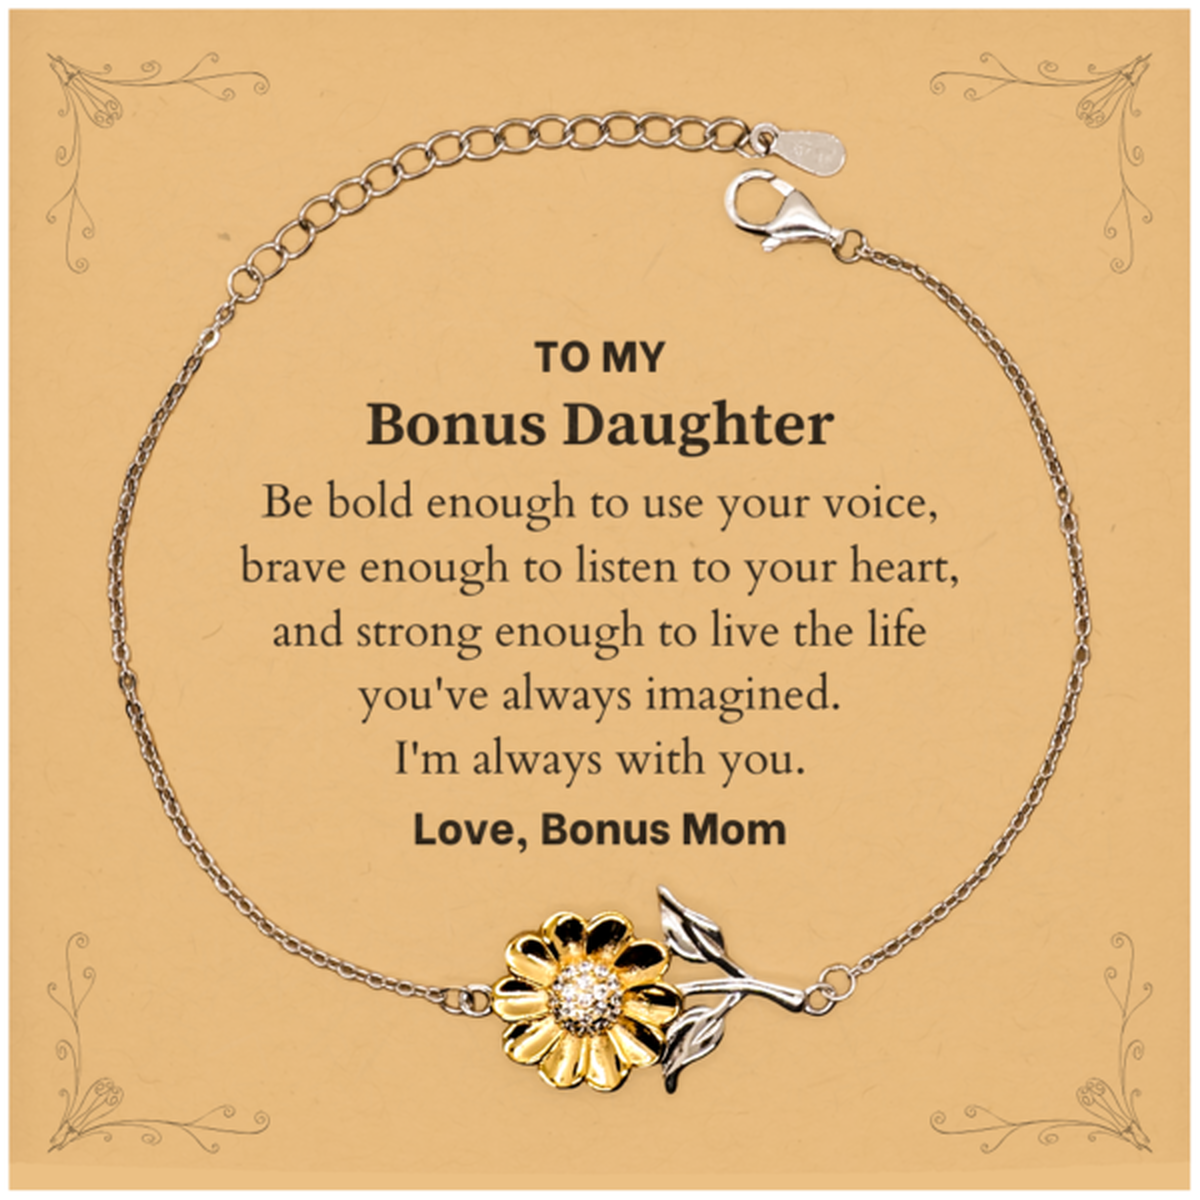 Keepsake Bonus Daughter Sunflower Bracelet Gift Idea Graduation Christmas Birthday Bonus Daughter from Bonus Mom, Bonus Daughter Be bold enough to use your voice, brave enough to listen to your heart. Love, Bonus Mom